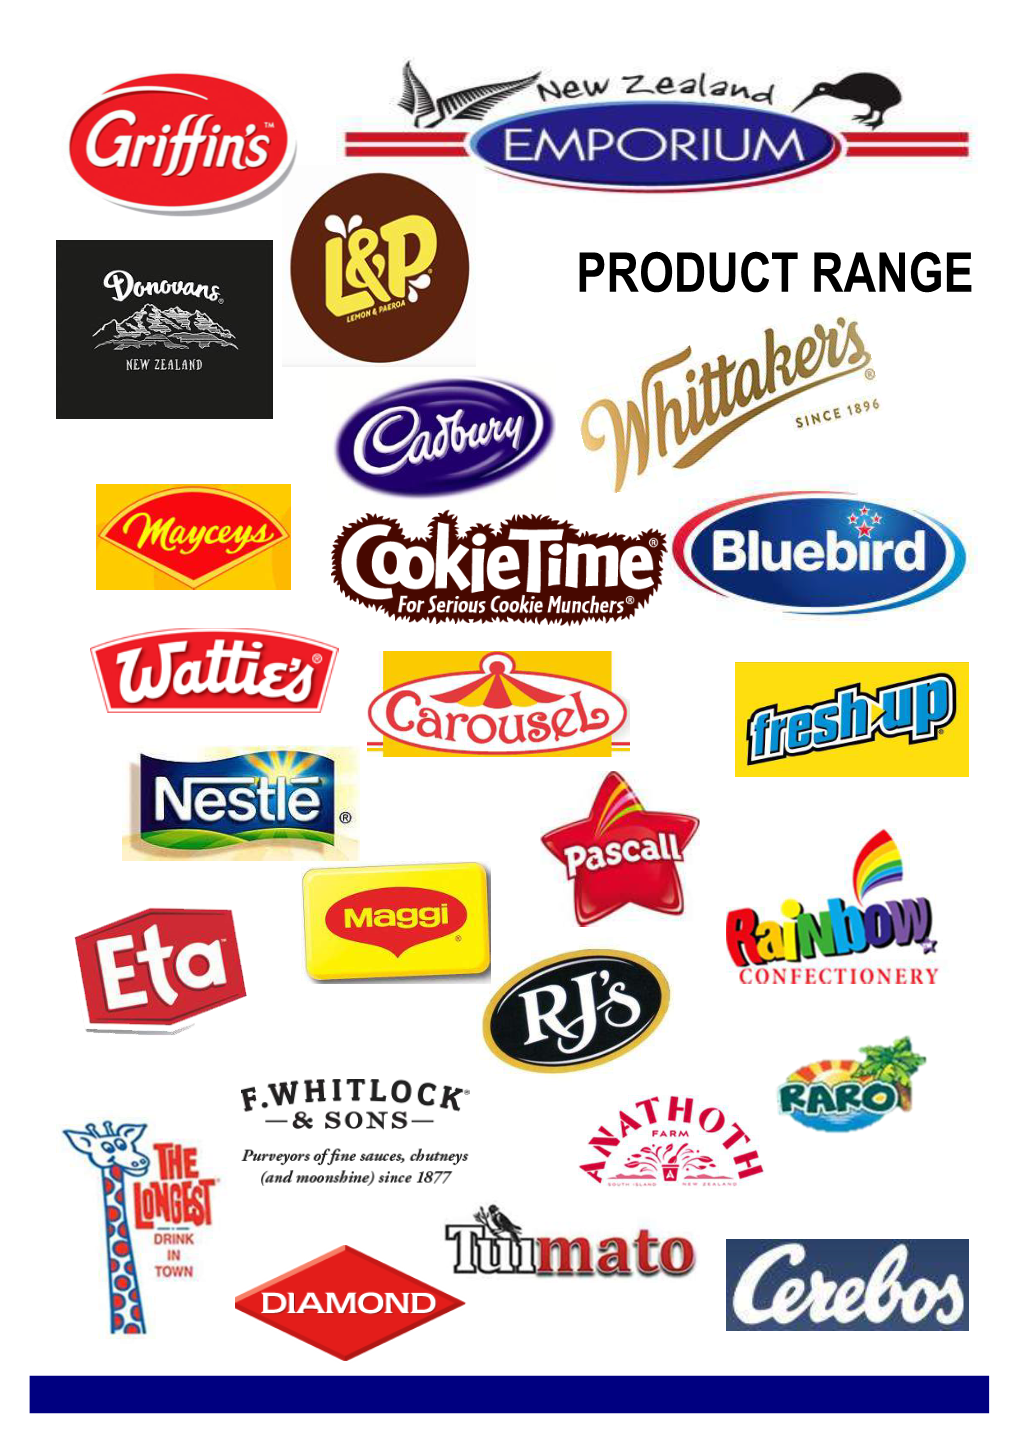 Product Range Biscuits